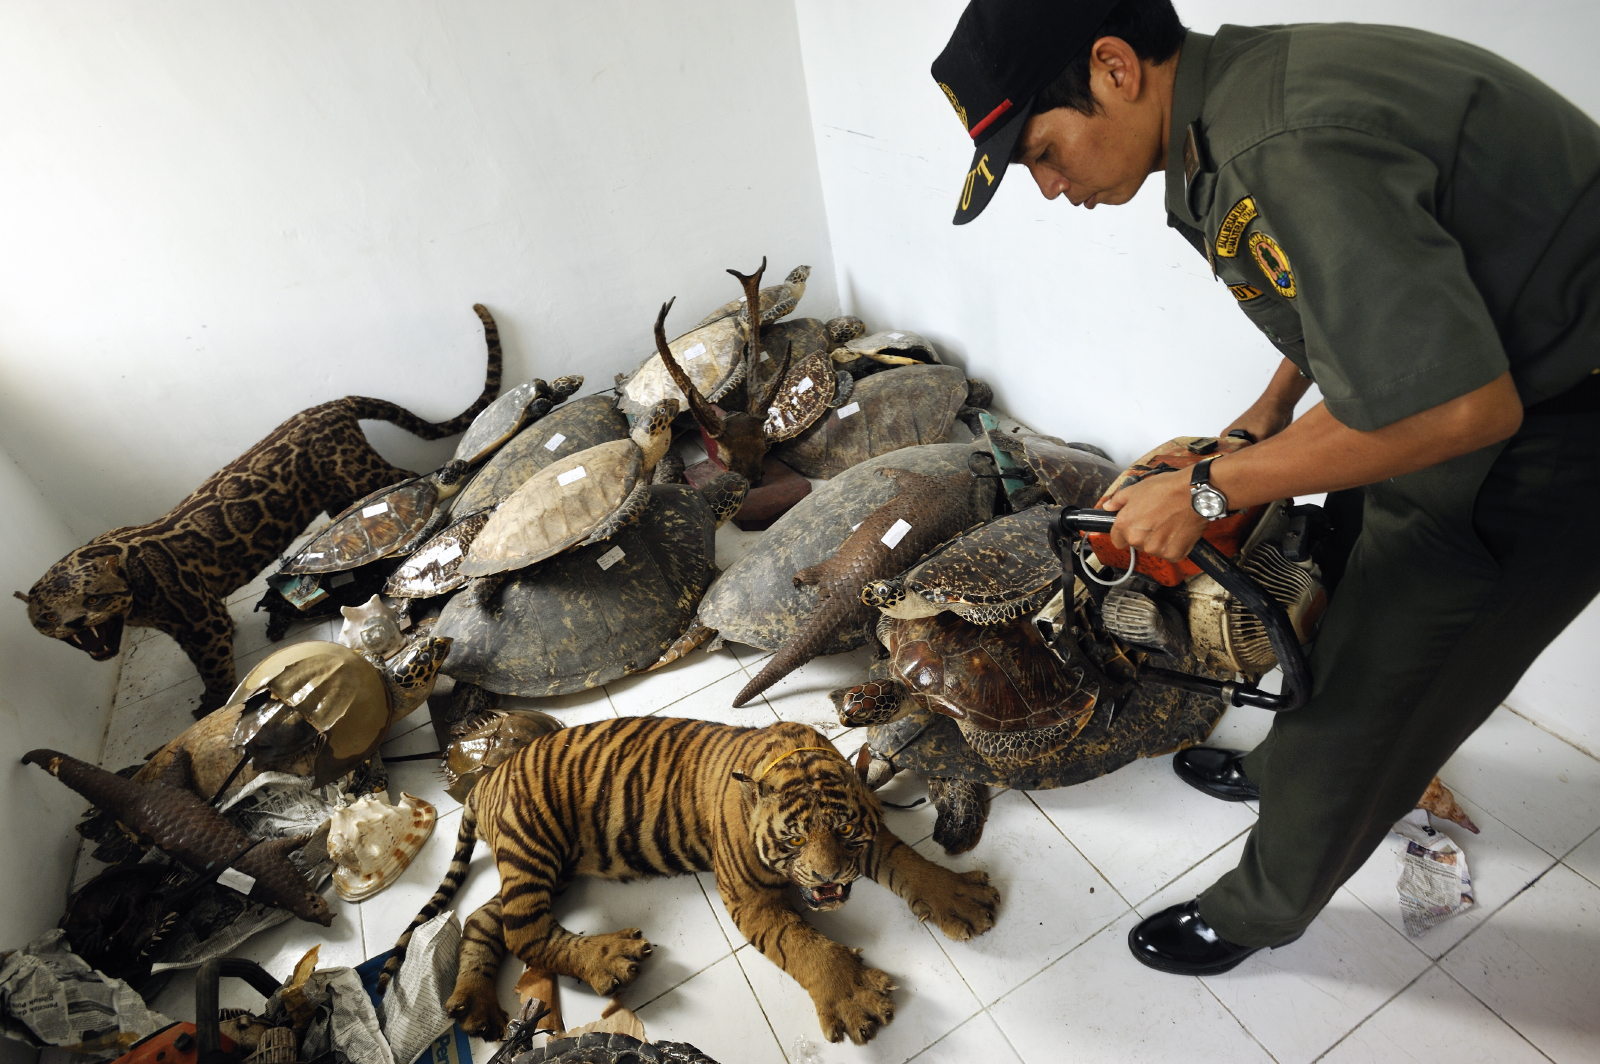 Wcs Lauds Apec Announcement To Combat Illegal Wildlife Trafficking Outdoorhub